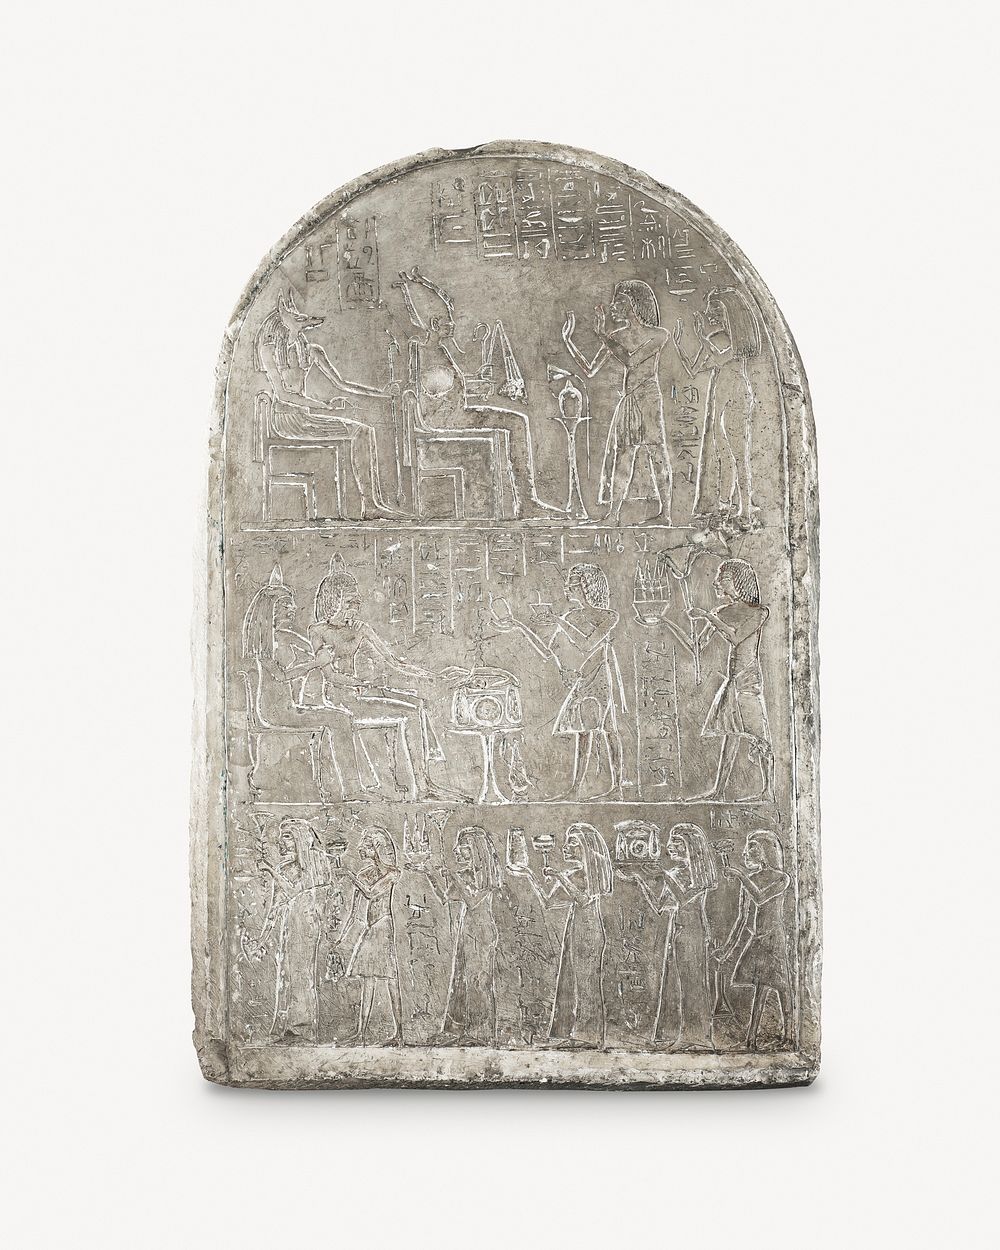 Thutmose's funerary stele, vintage ornamental psd